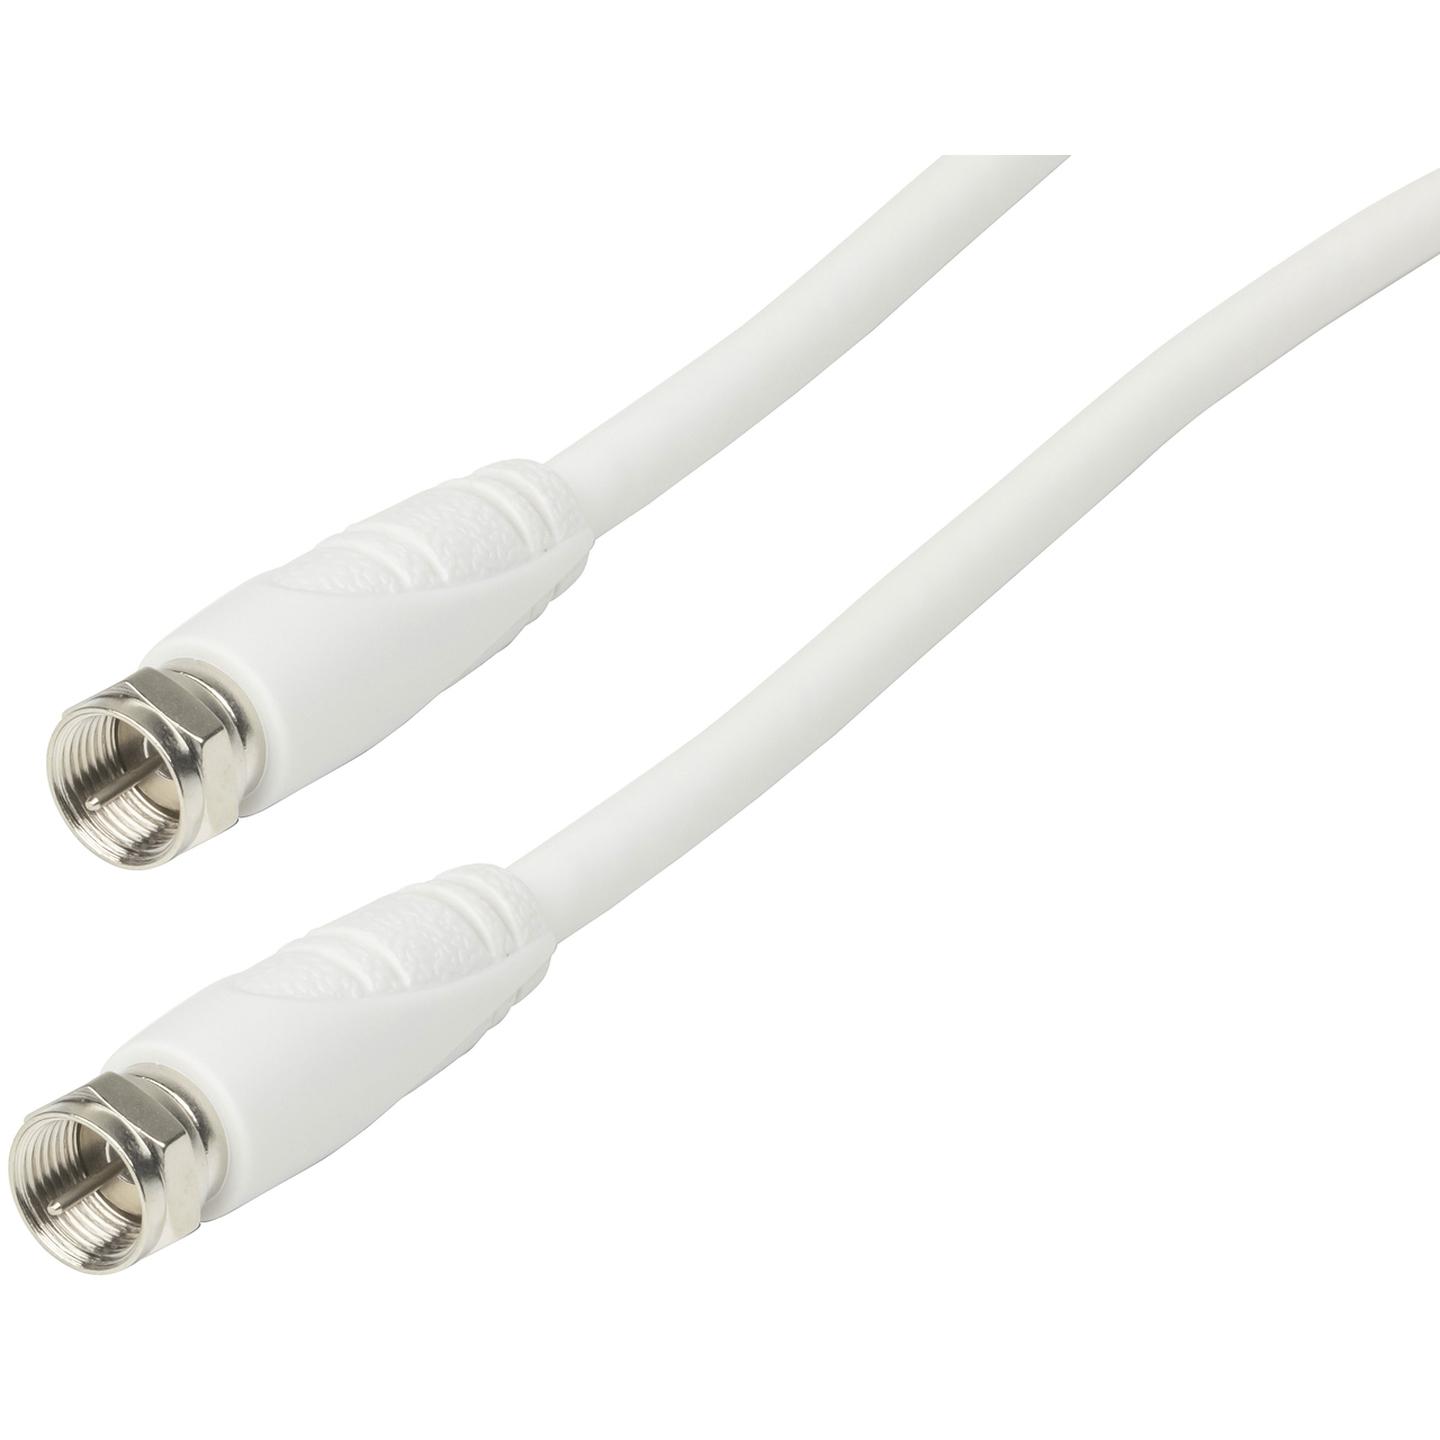 F Plug to F Plug Cable White - 1.5m